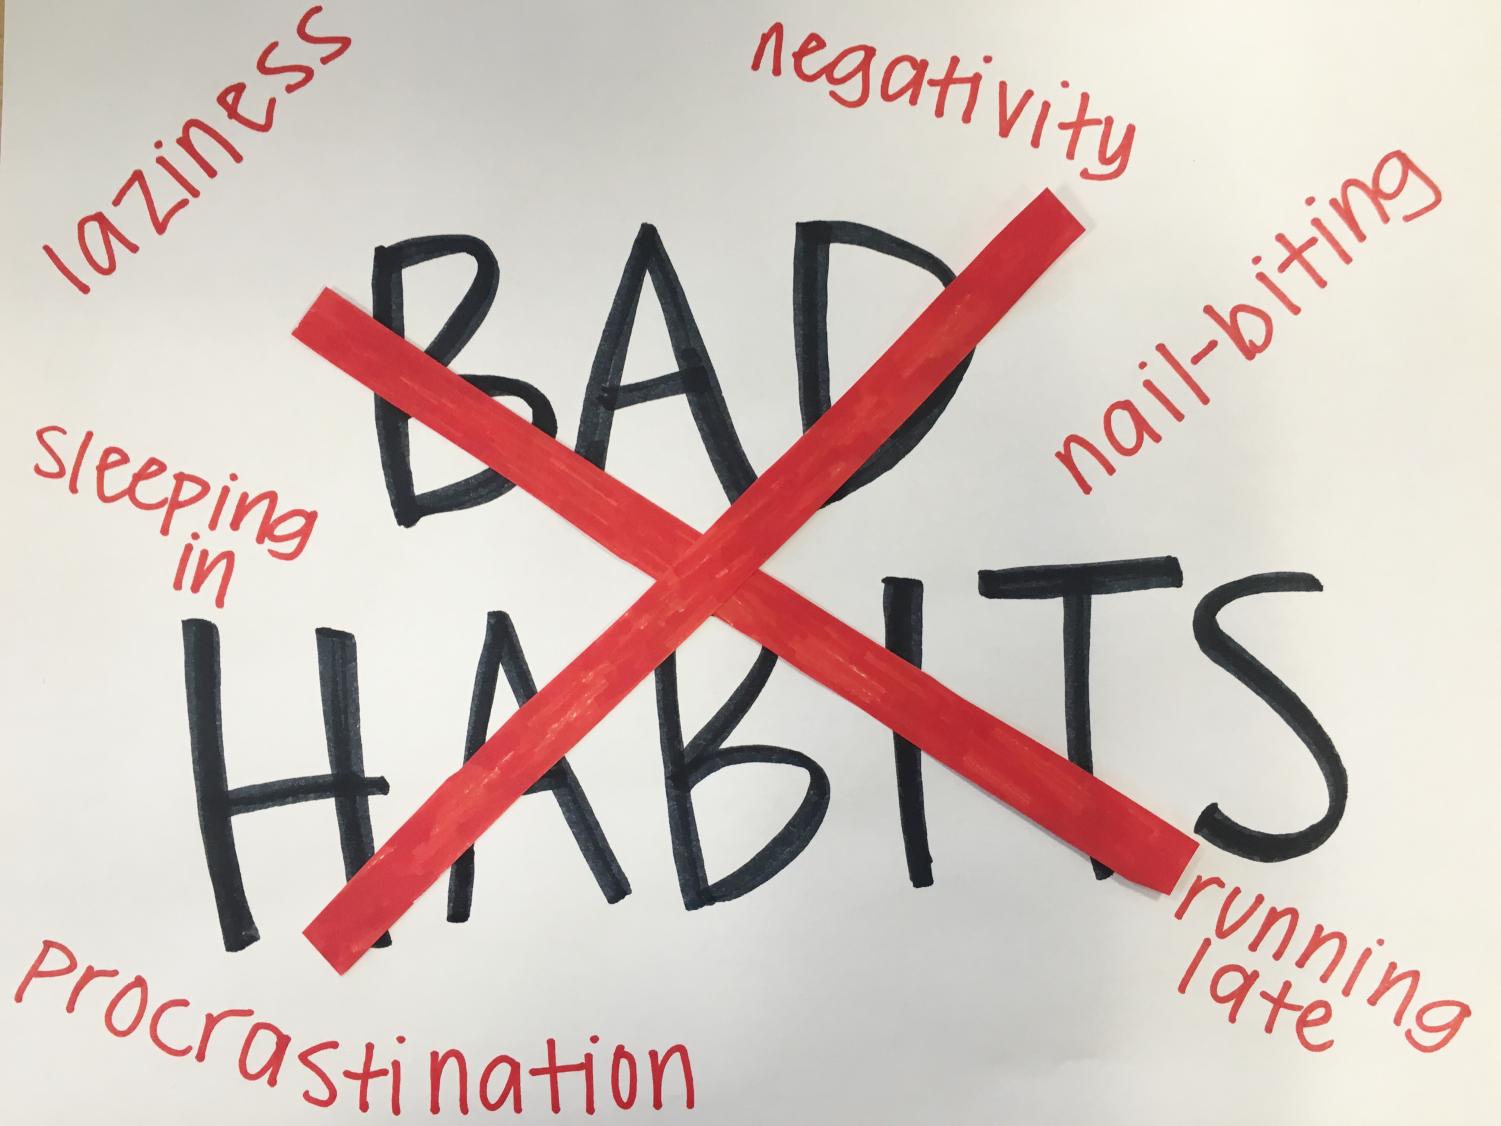 bad habits